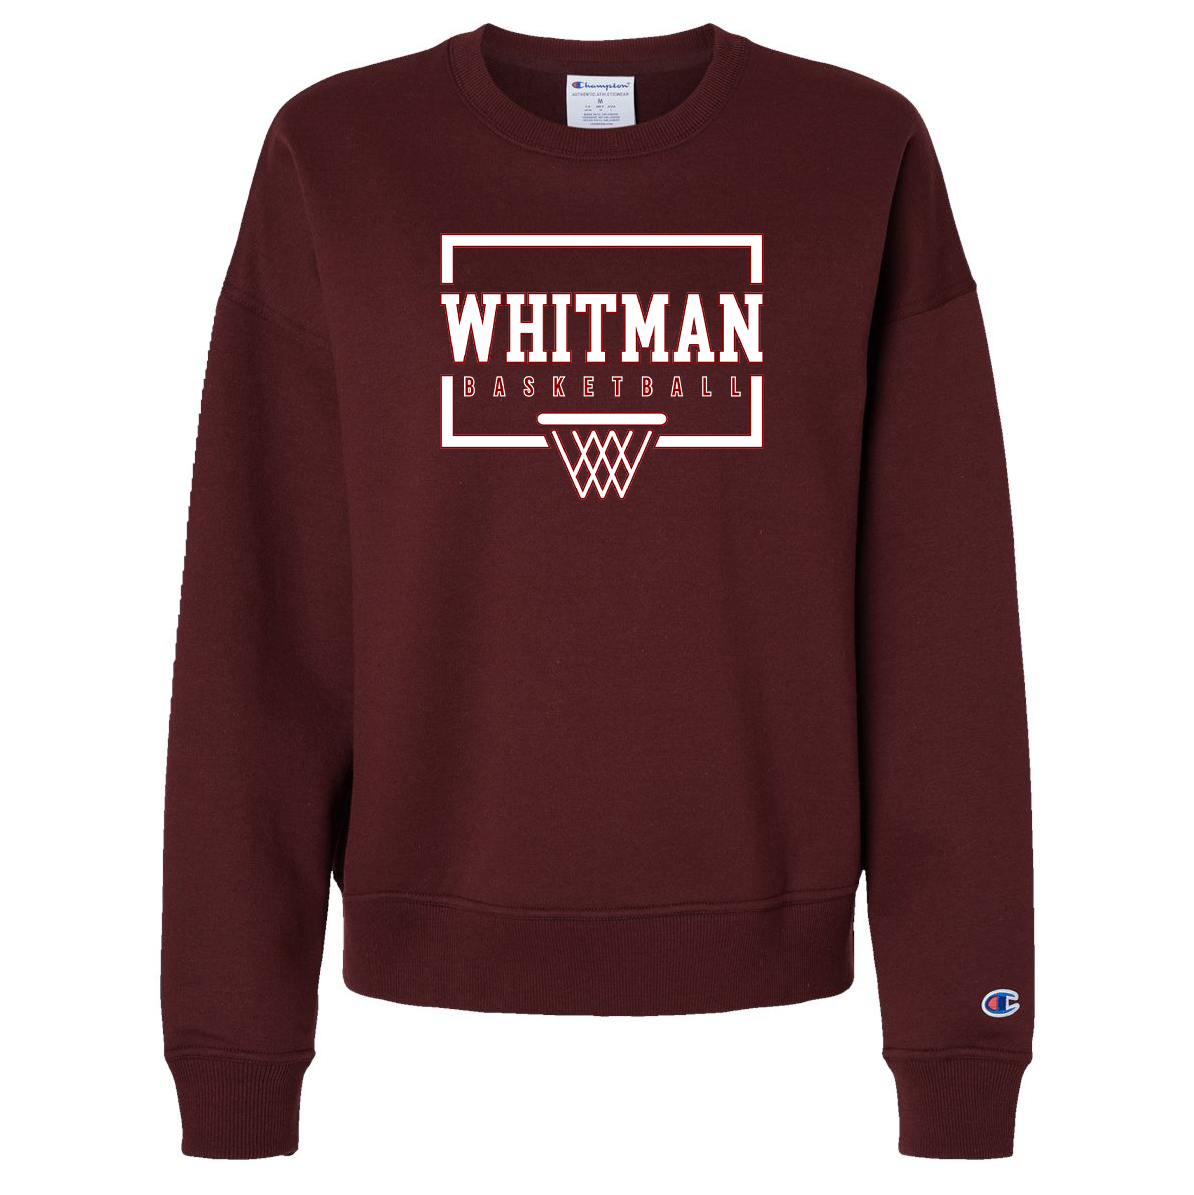 Whitman Women's Basketball Garment-Dyed Crewneck Sweatshirt